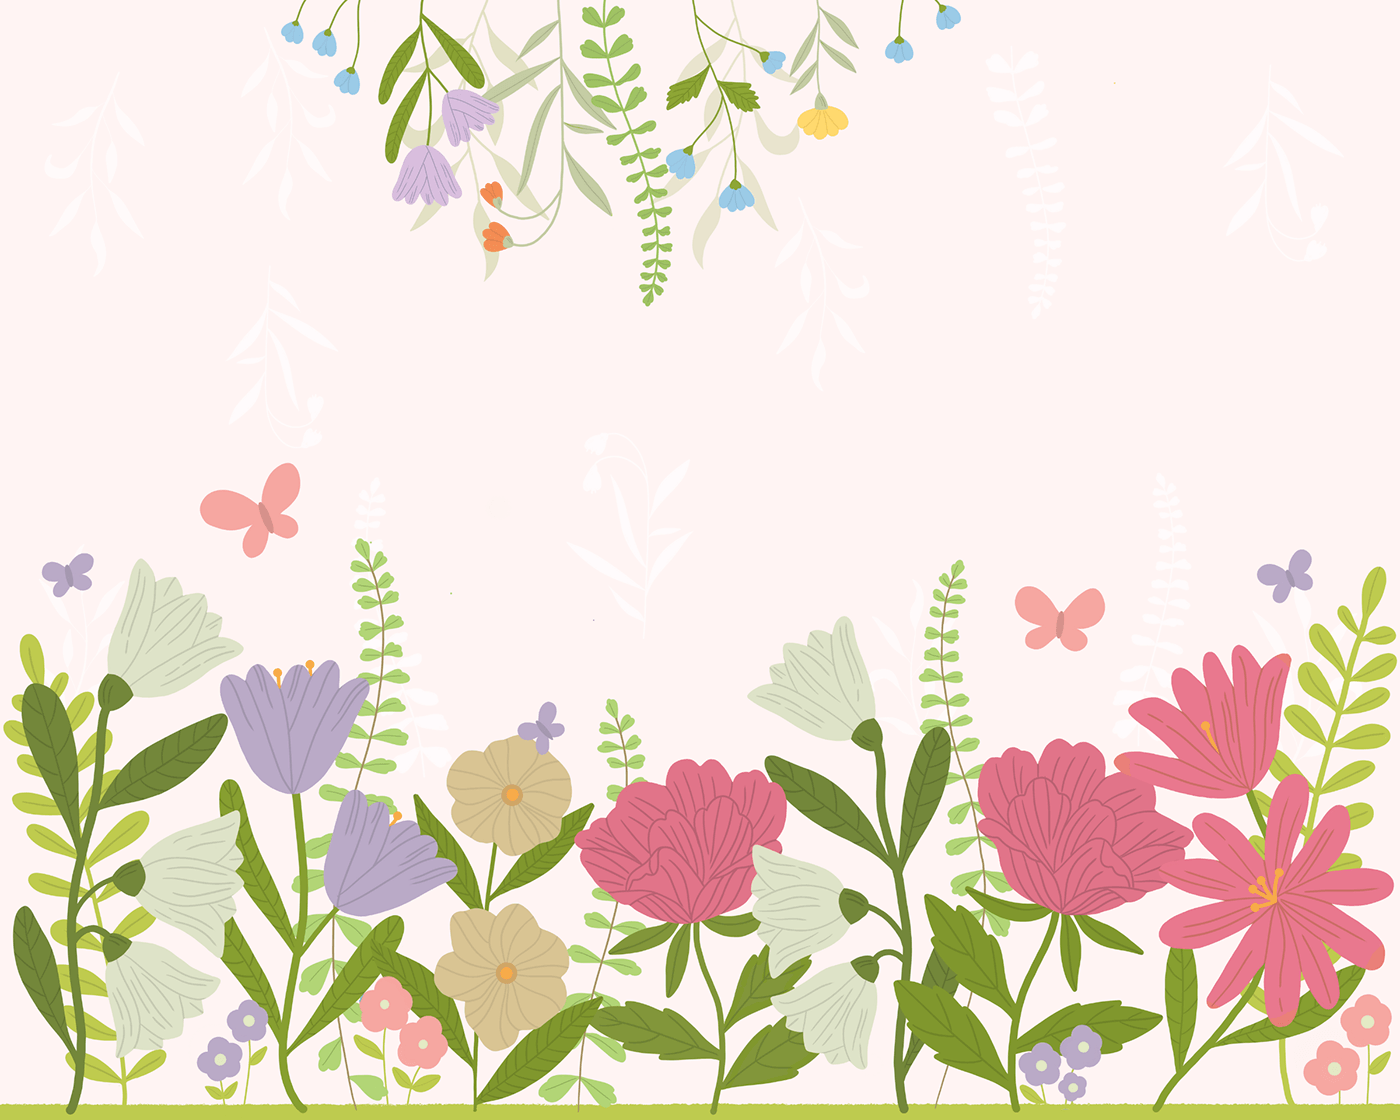 fairy Flowers wallpaper Digital Art  ILLUSTRATION  Character design  floral pattern walldesign interior design  kids illustration